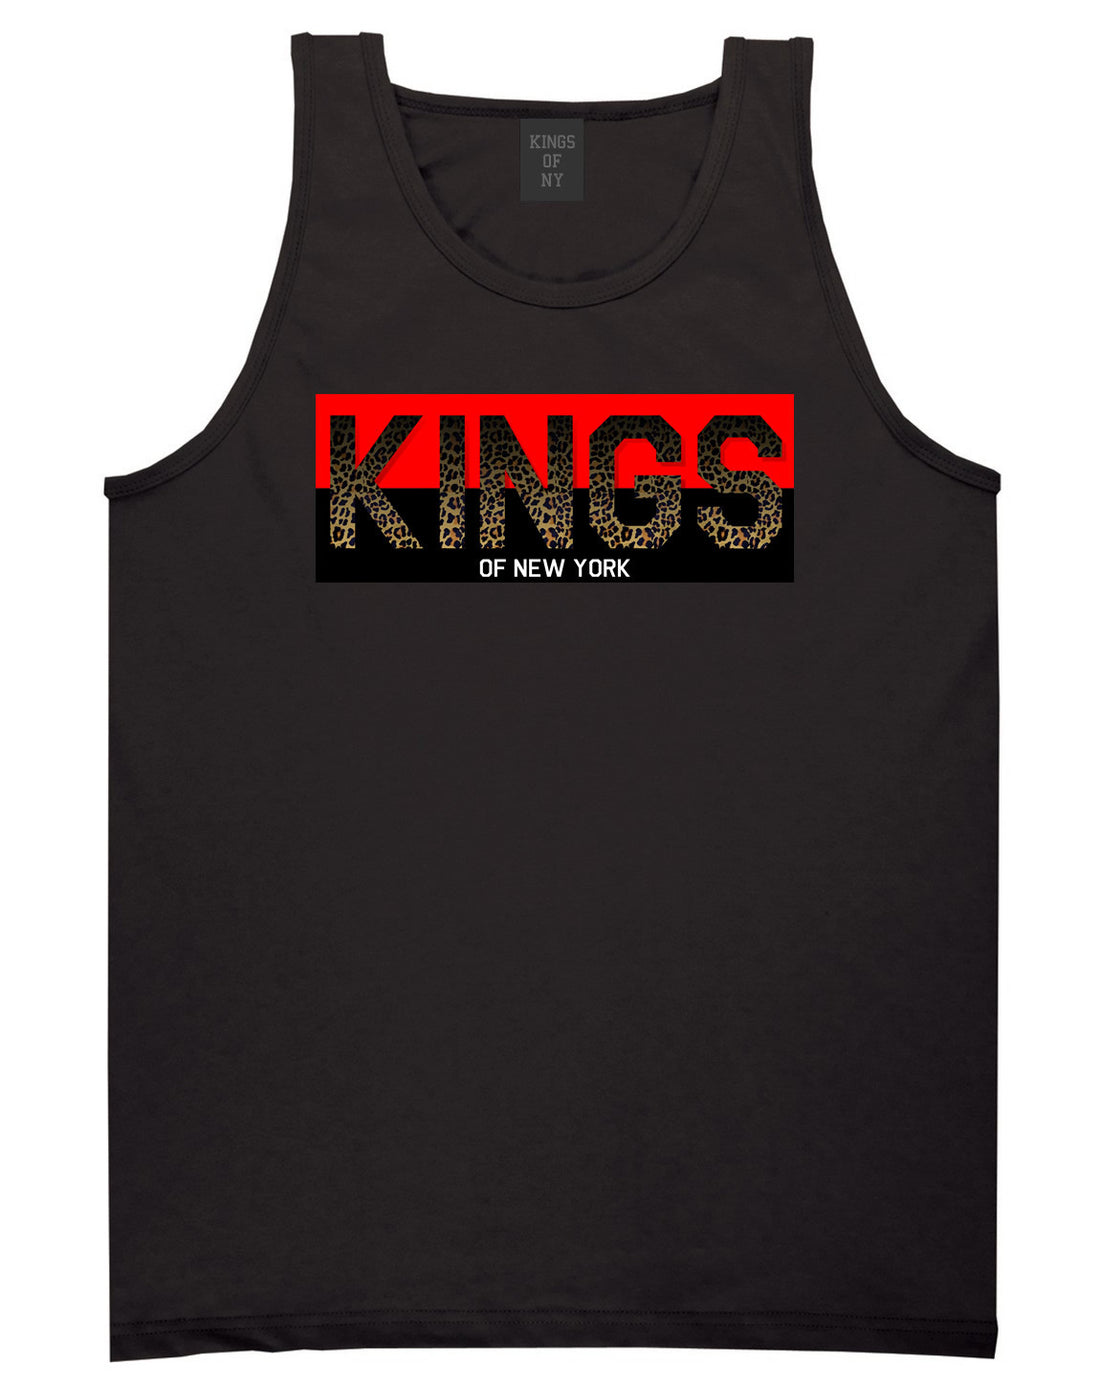 Kings Of NY Cheetah Print Tank Top in Black